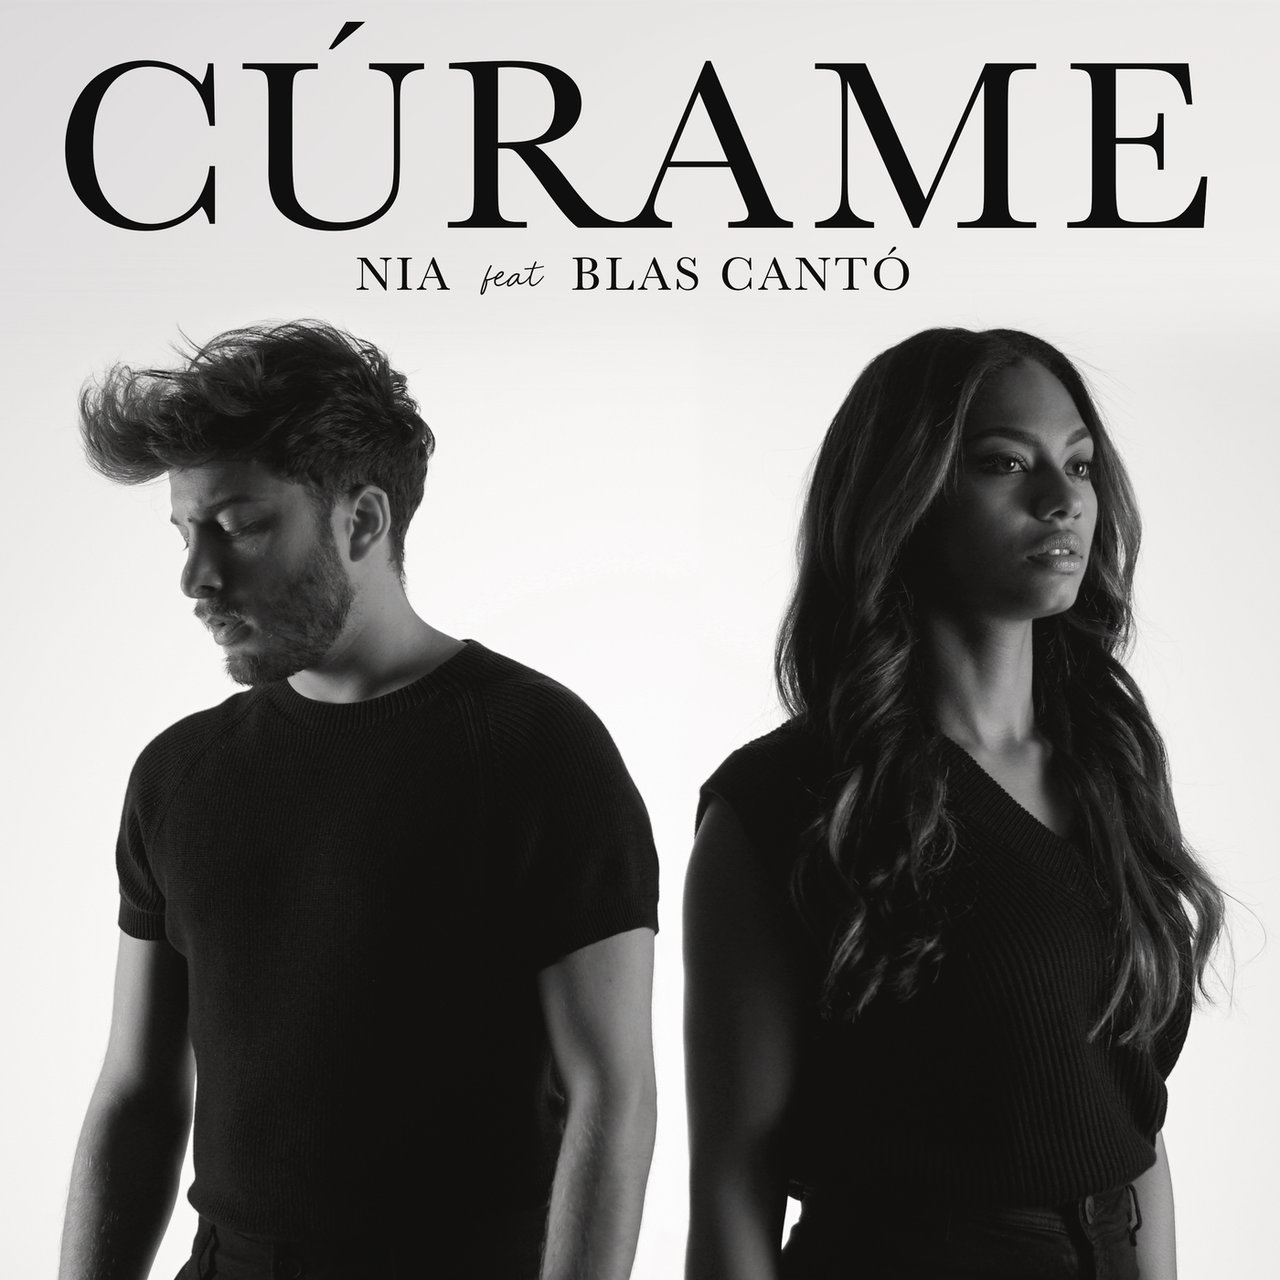 NIA featuring Blas Cantó — Cúrame cover artwork